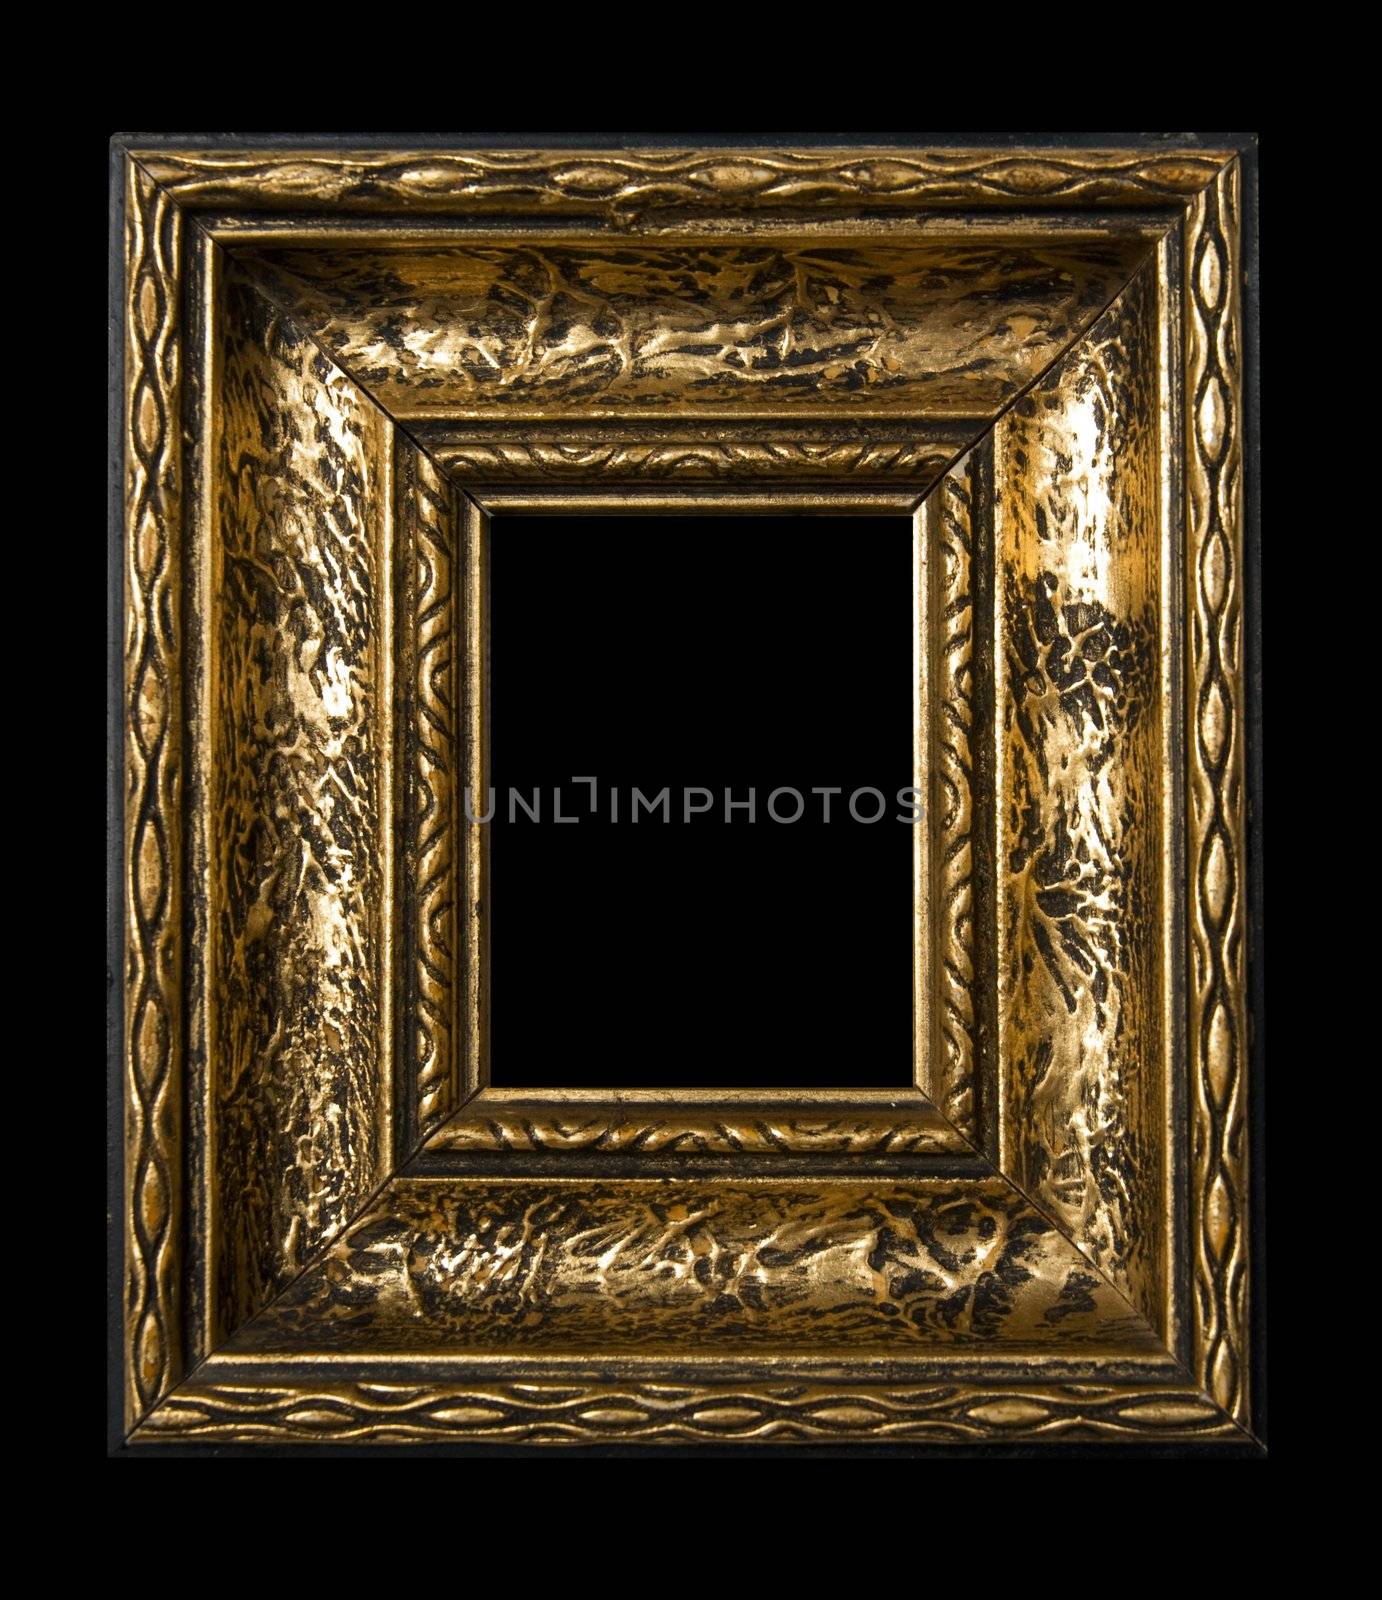 Old Gold Picture Frame on black background